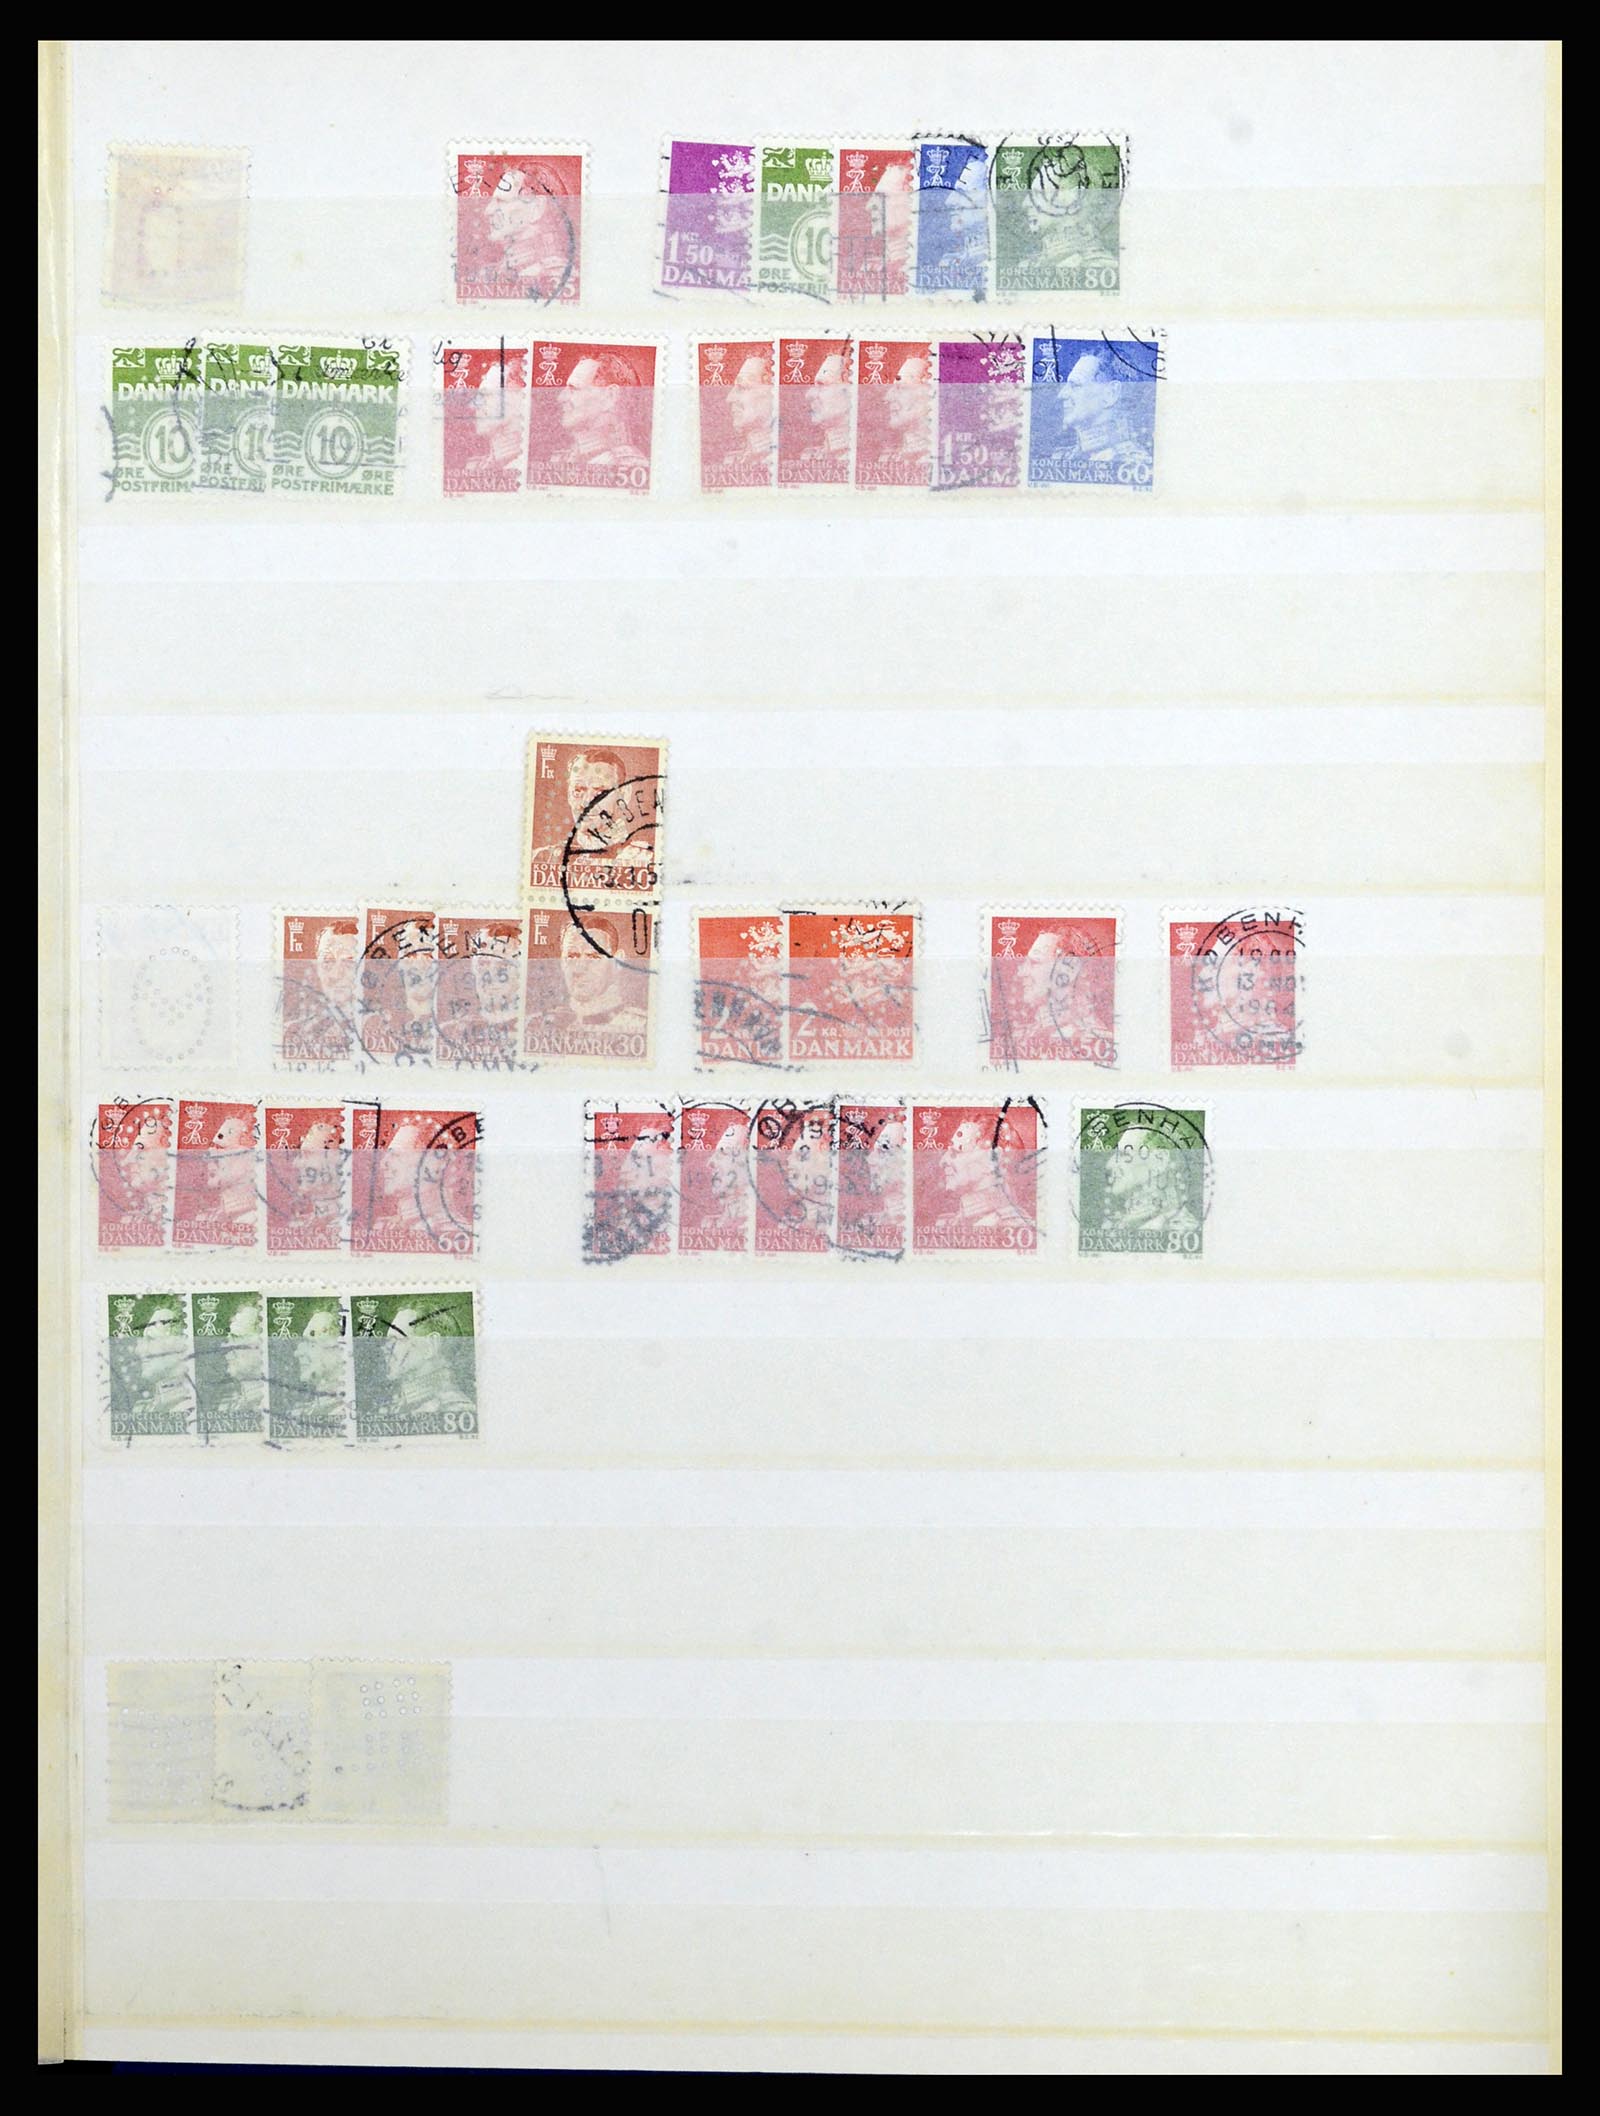 37056 065 - Stamp collection 37056 Denmark perfins.